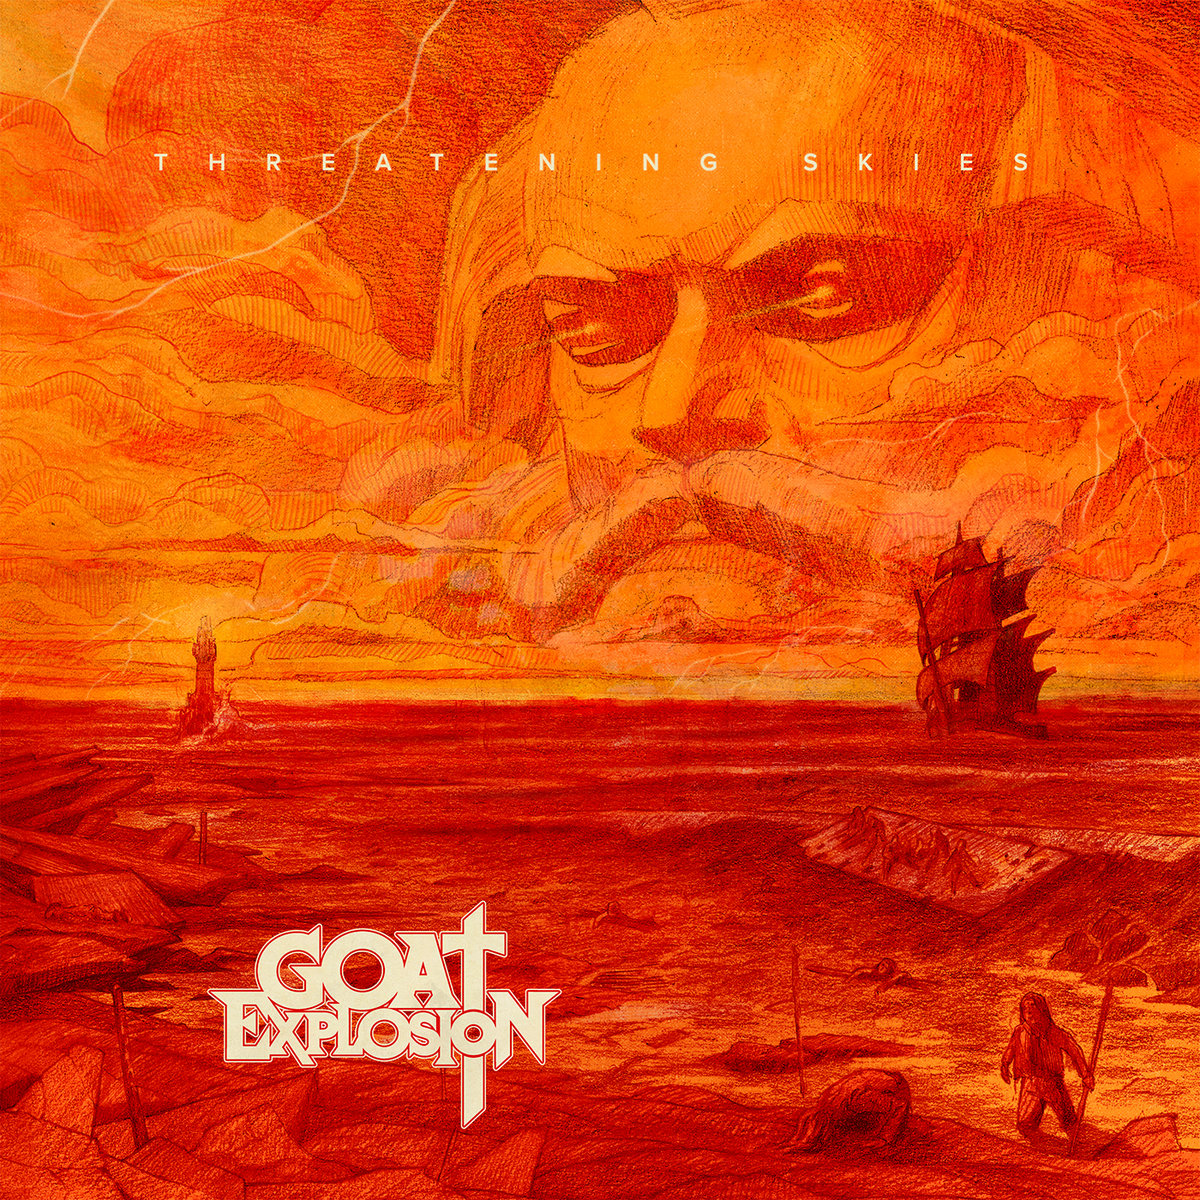 Goat Explosion - "Threatening Skies" - 2023